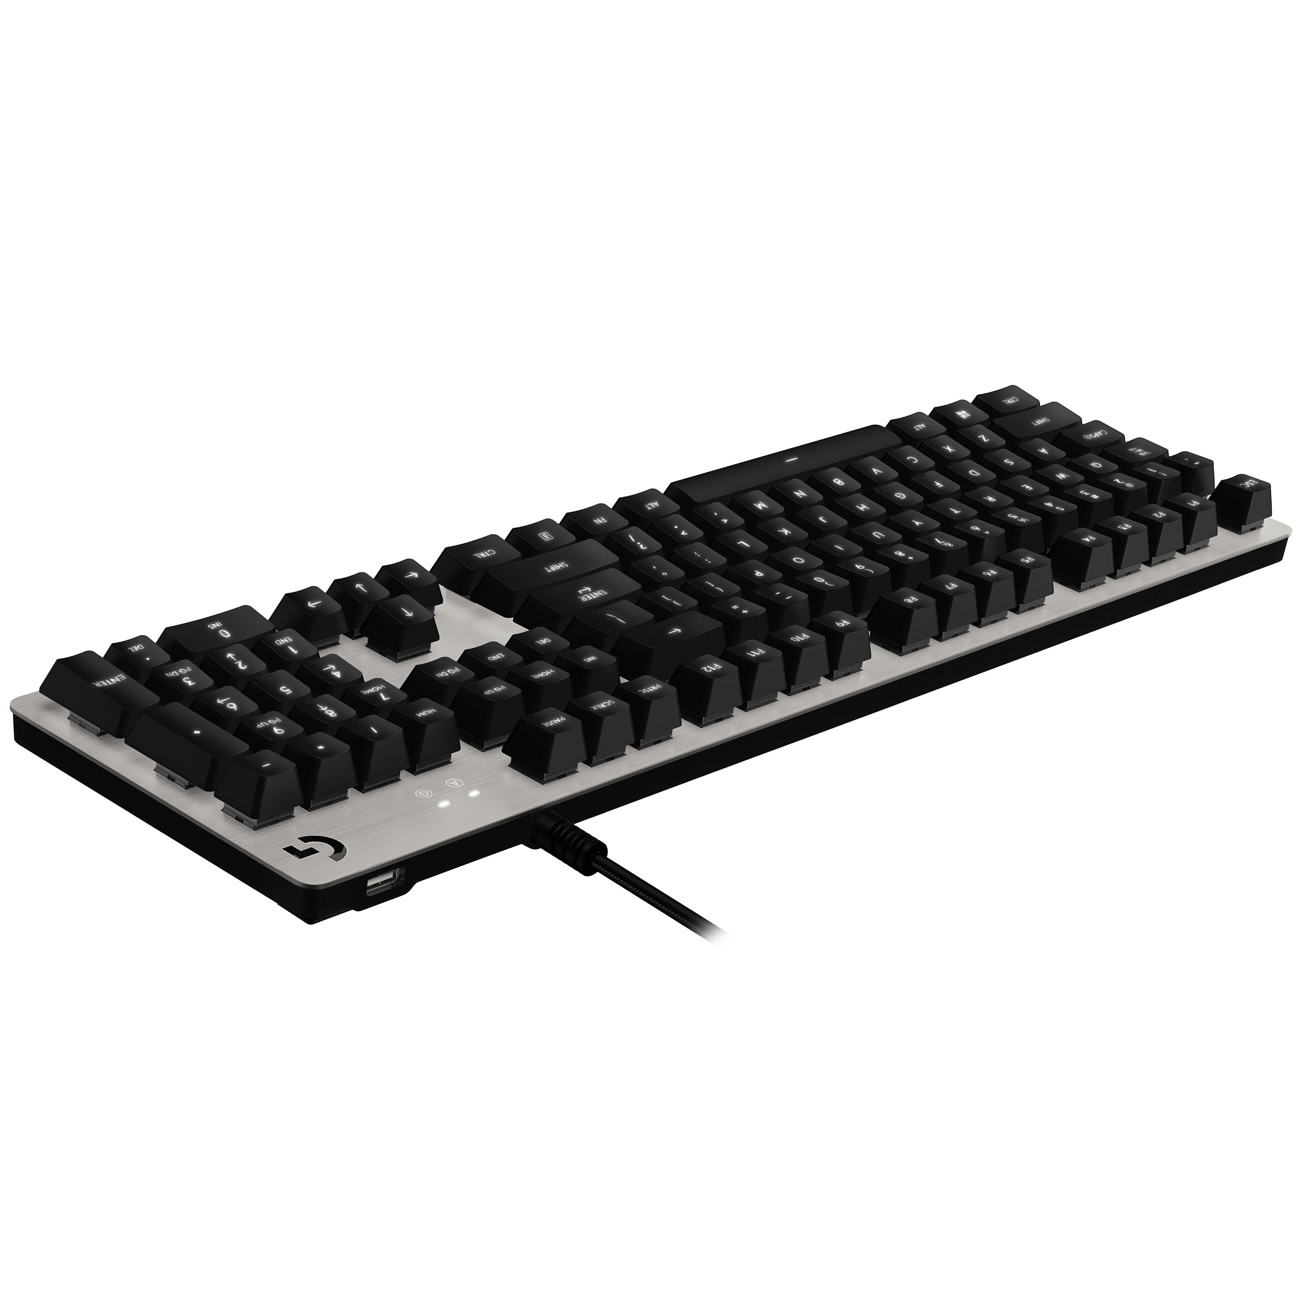 Клавиатура Logitech Gaming Keyboard G413 Mechanical, 1.8м, серебристый